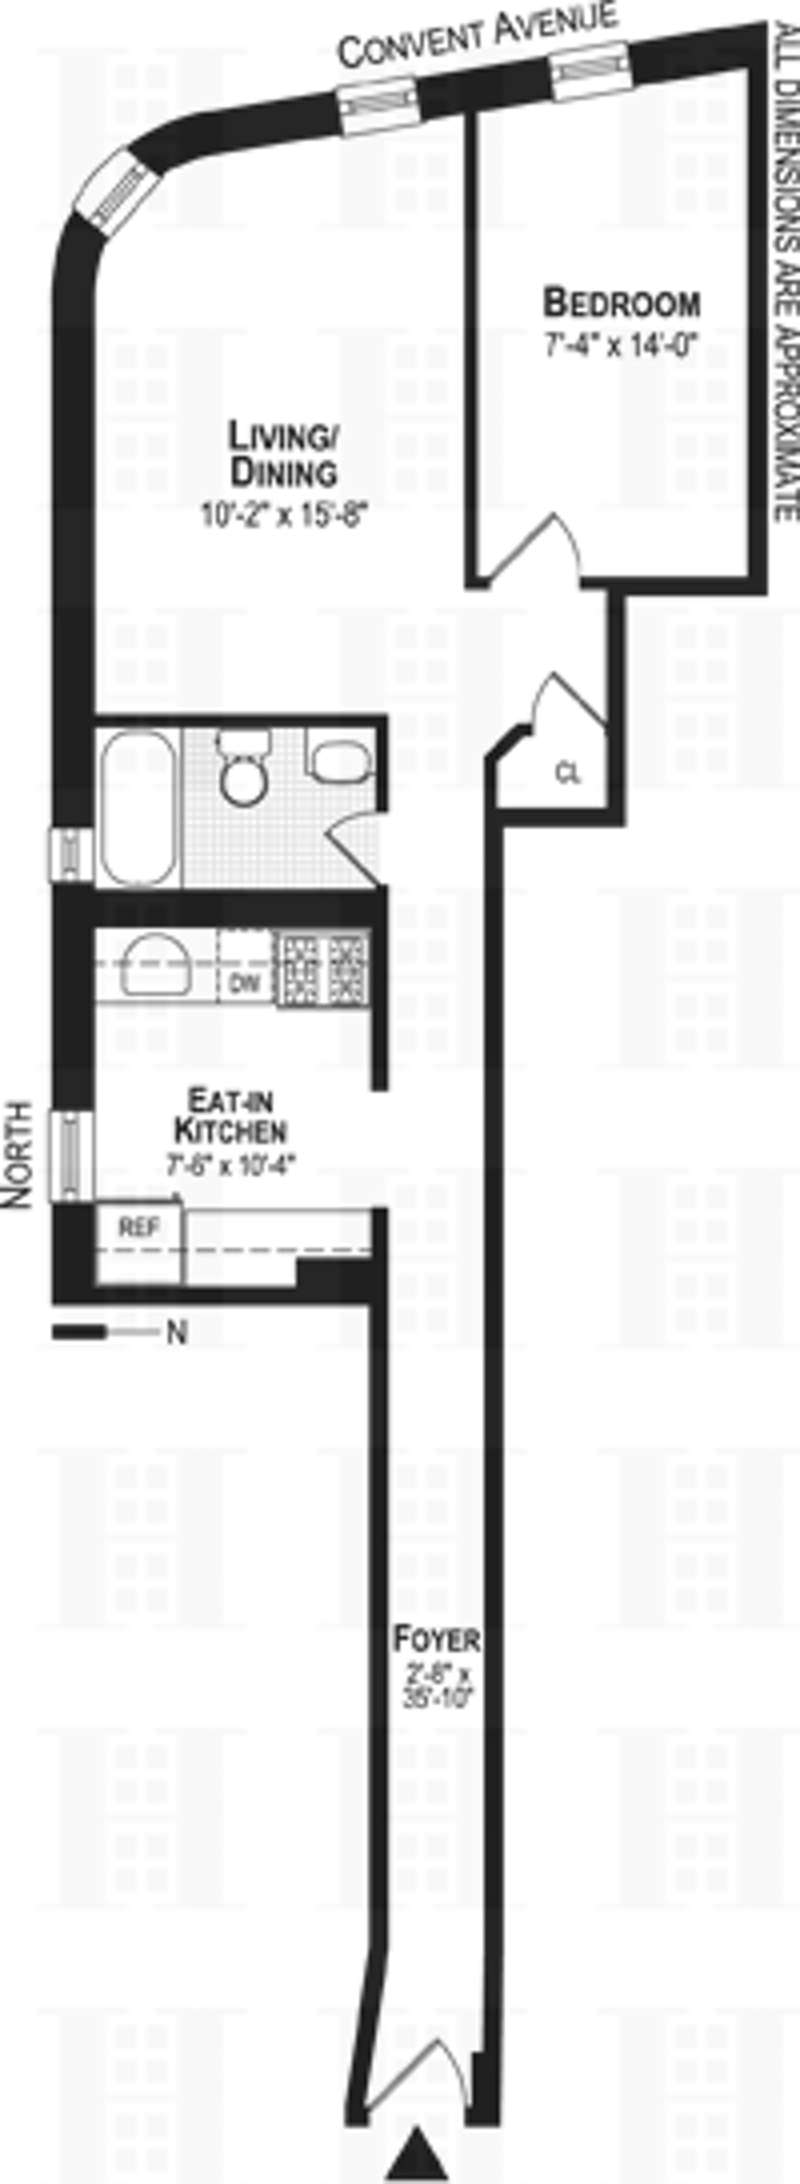 Floorplan for 100 Convent Avenue, 207